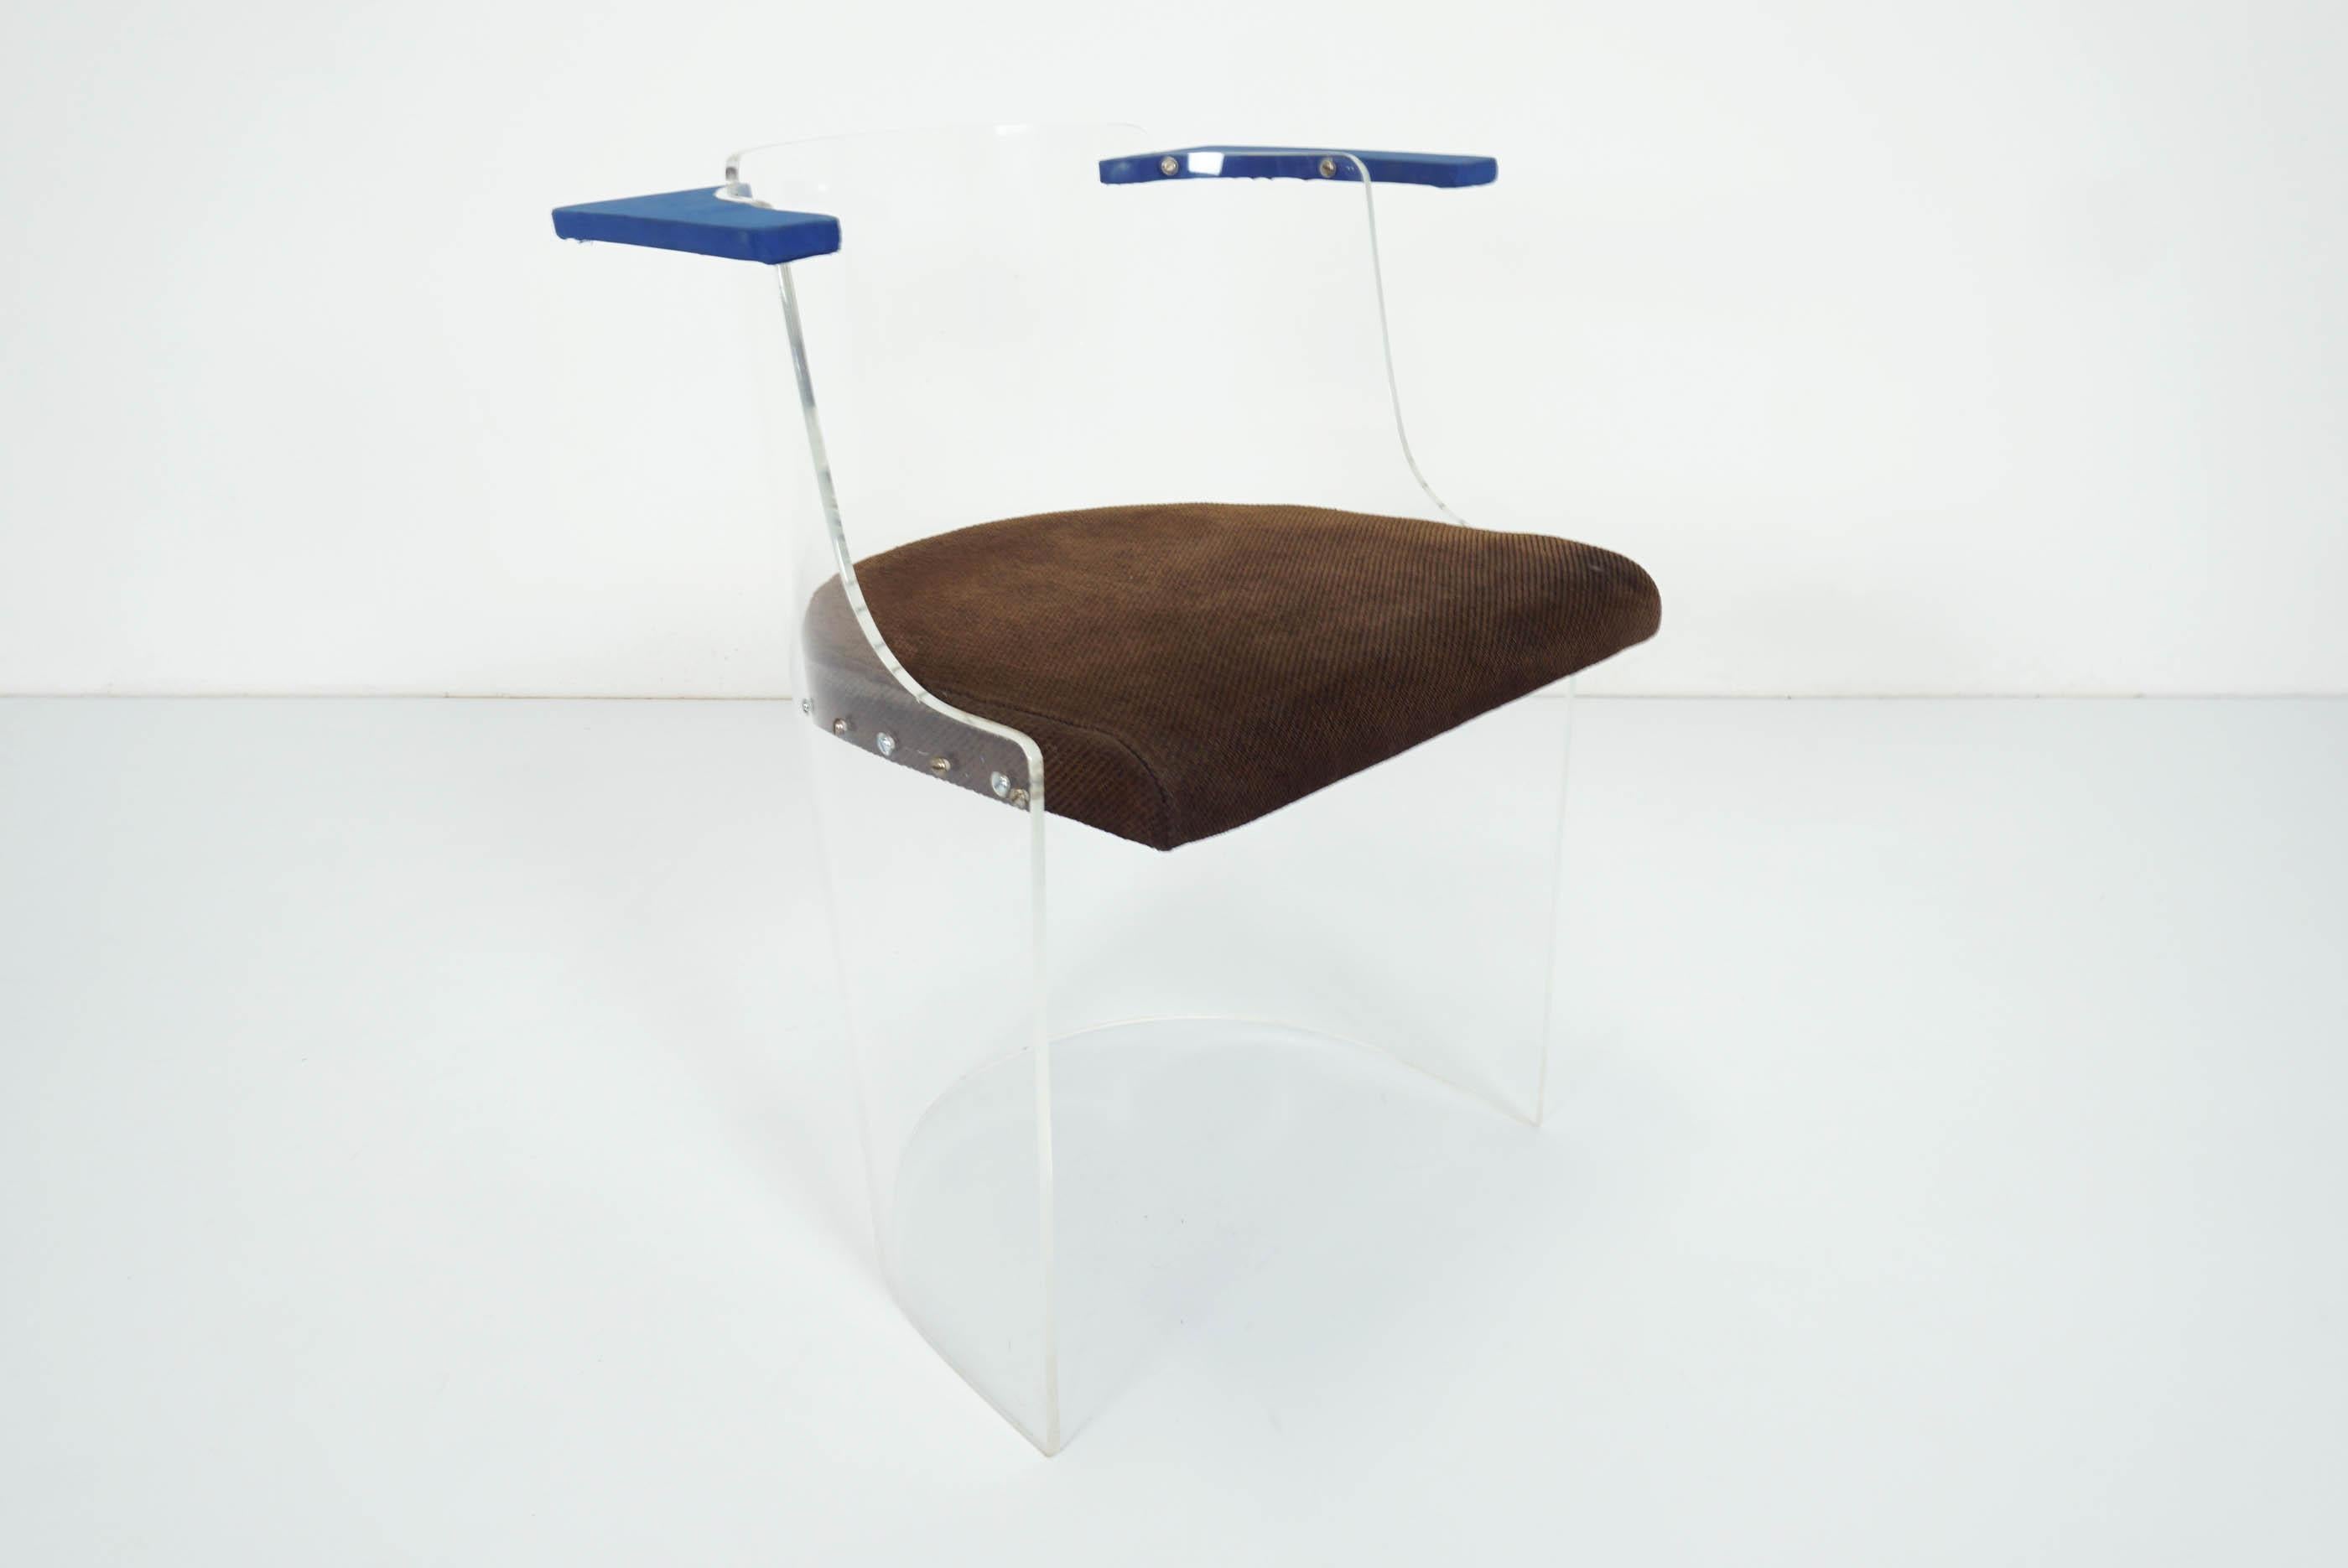 Metal El Lissitzky 1930 Plexiglass Chair Made by Tecta D61 Chair Germany